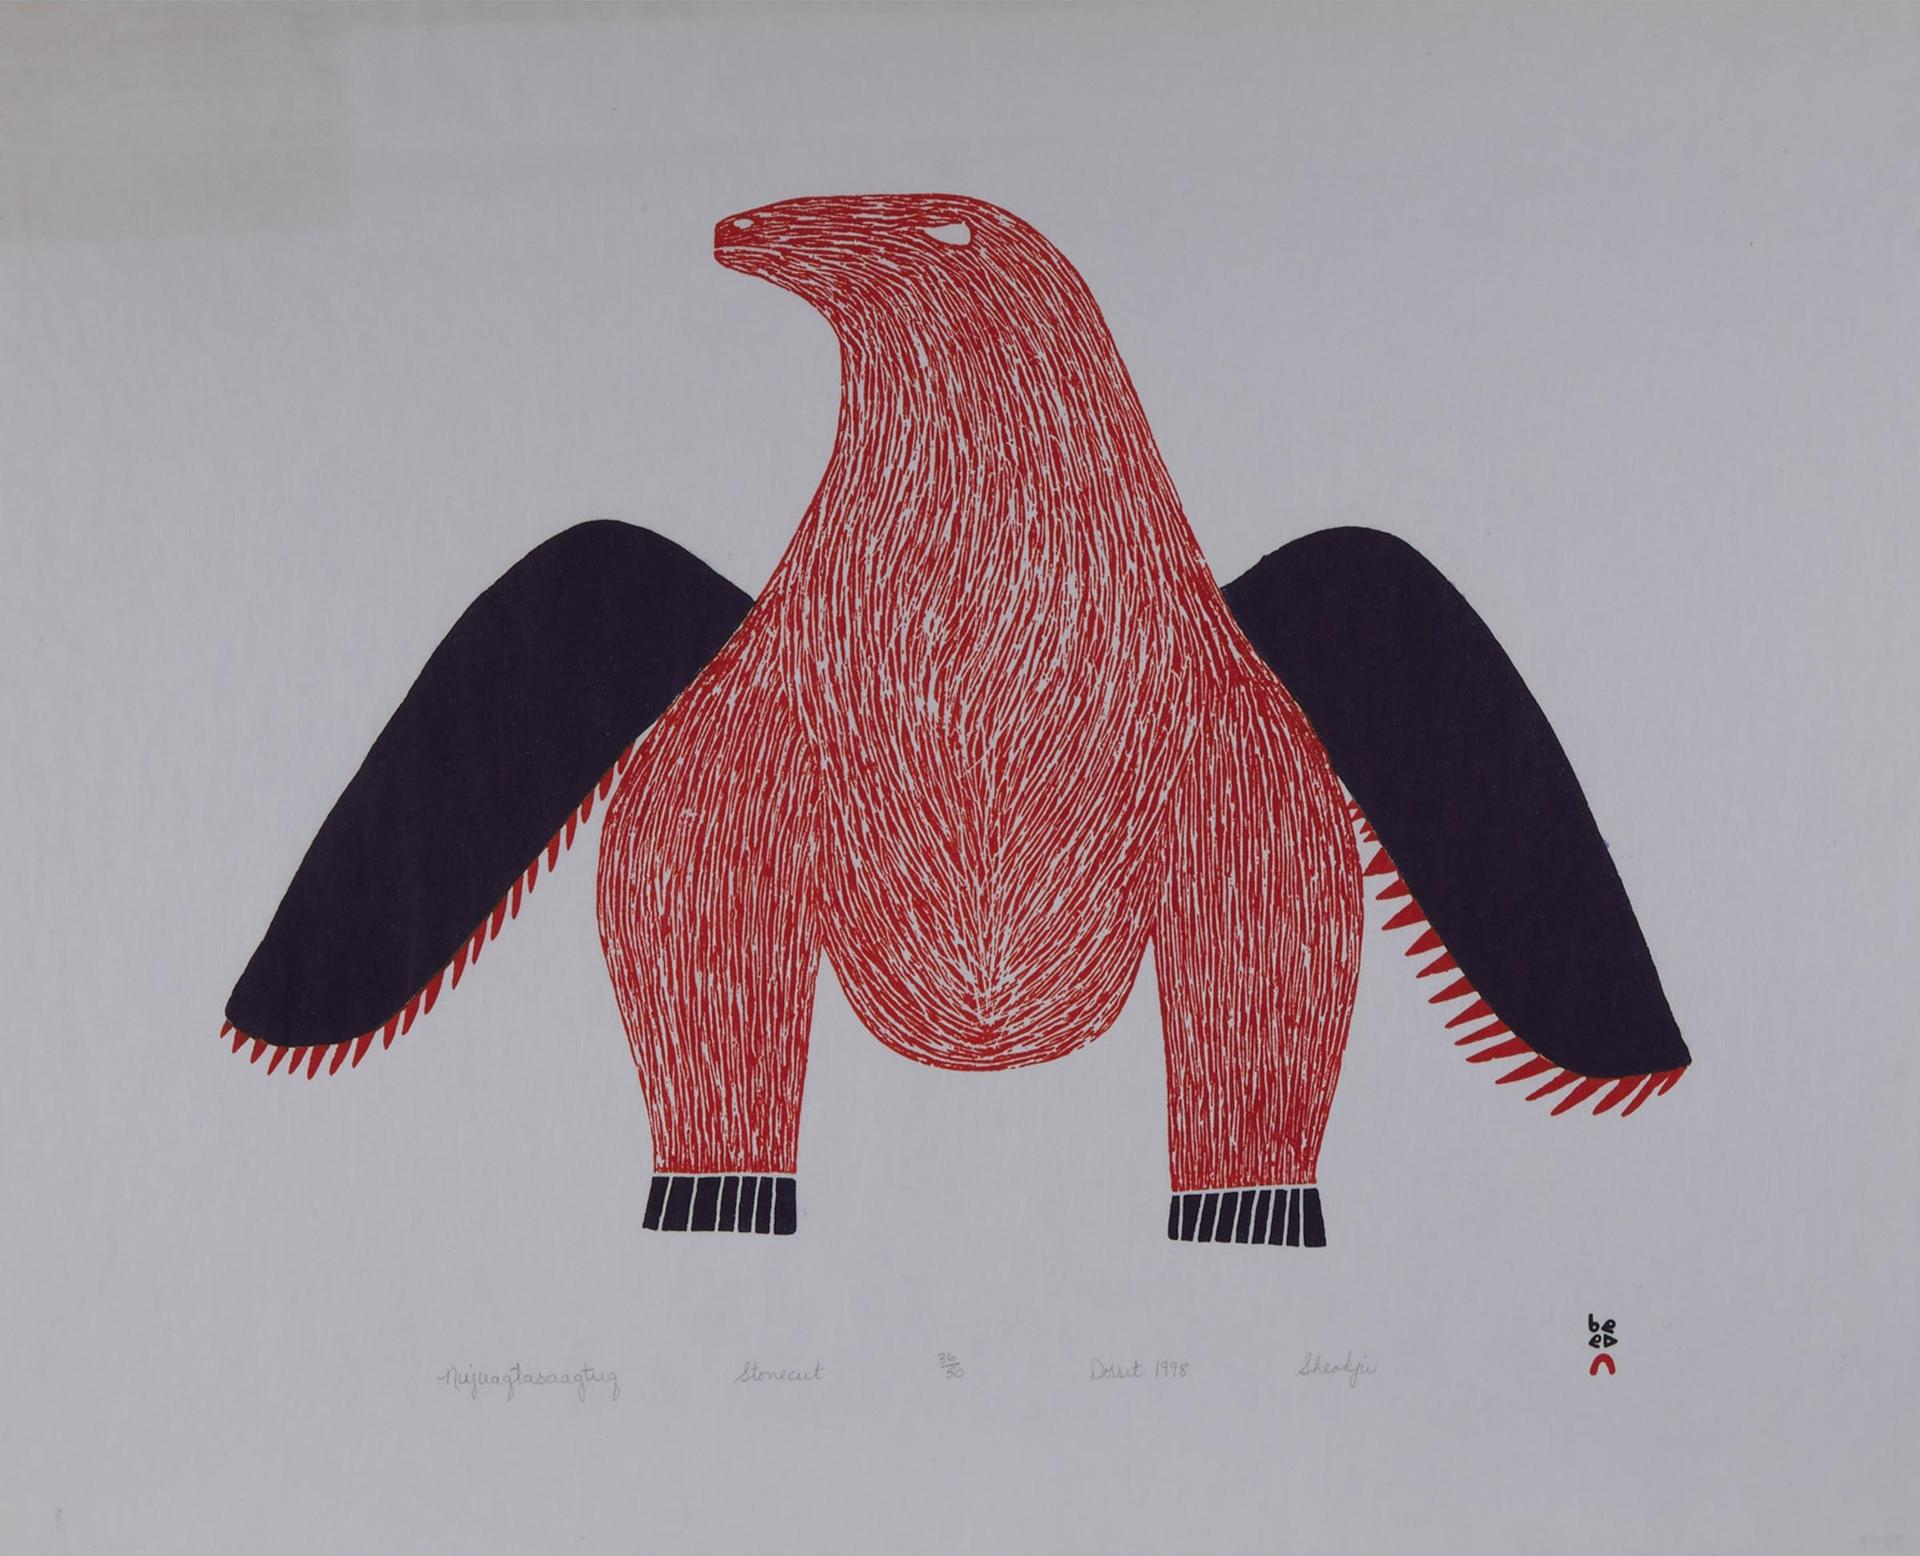 Sheojuk Etidlooie (1932-1999) - Nujuaqtasaaqtuq (Alerted Bird)